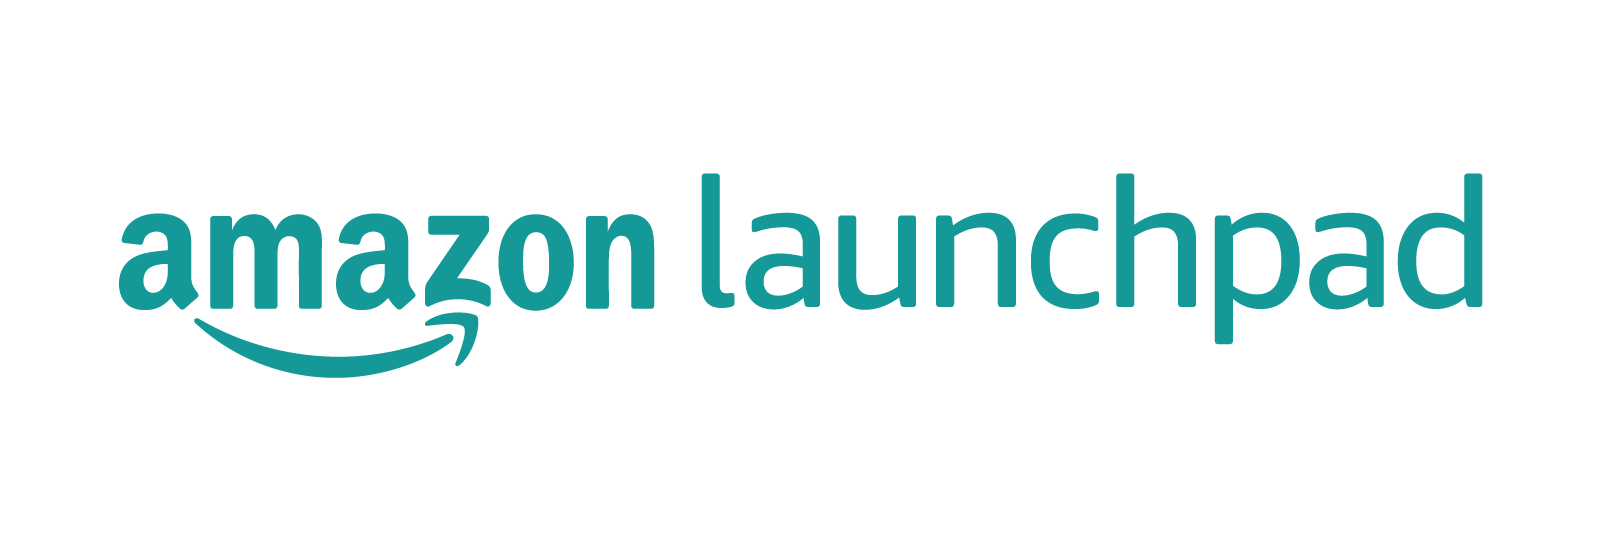 Amazon Launchpad Logo